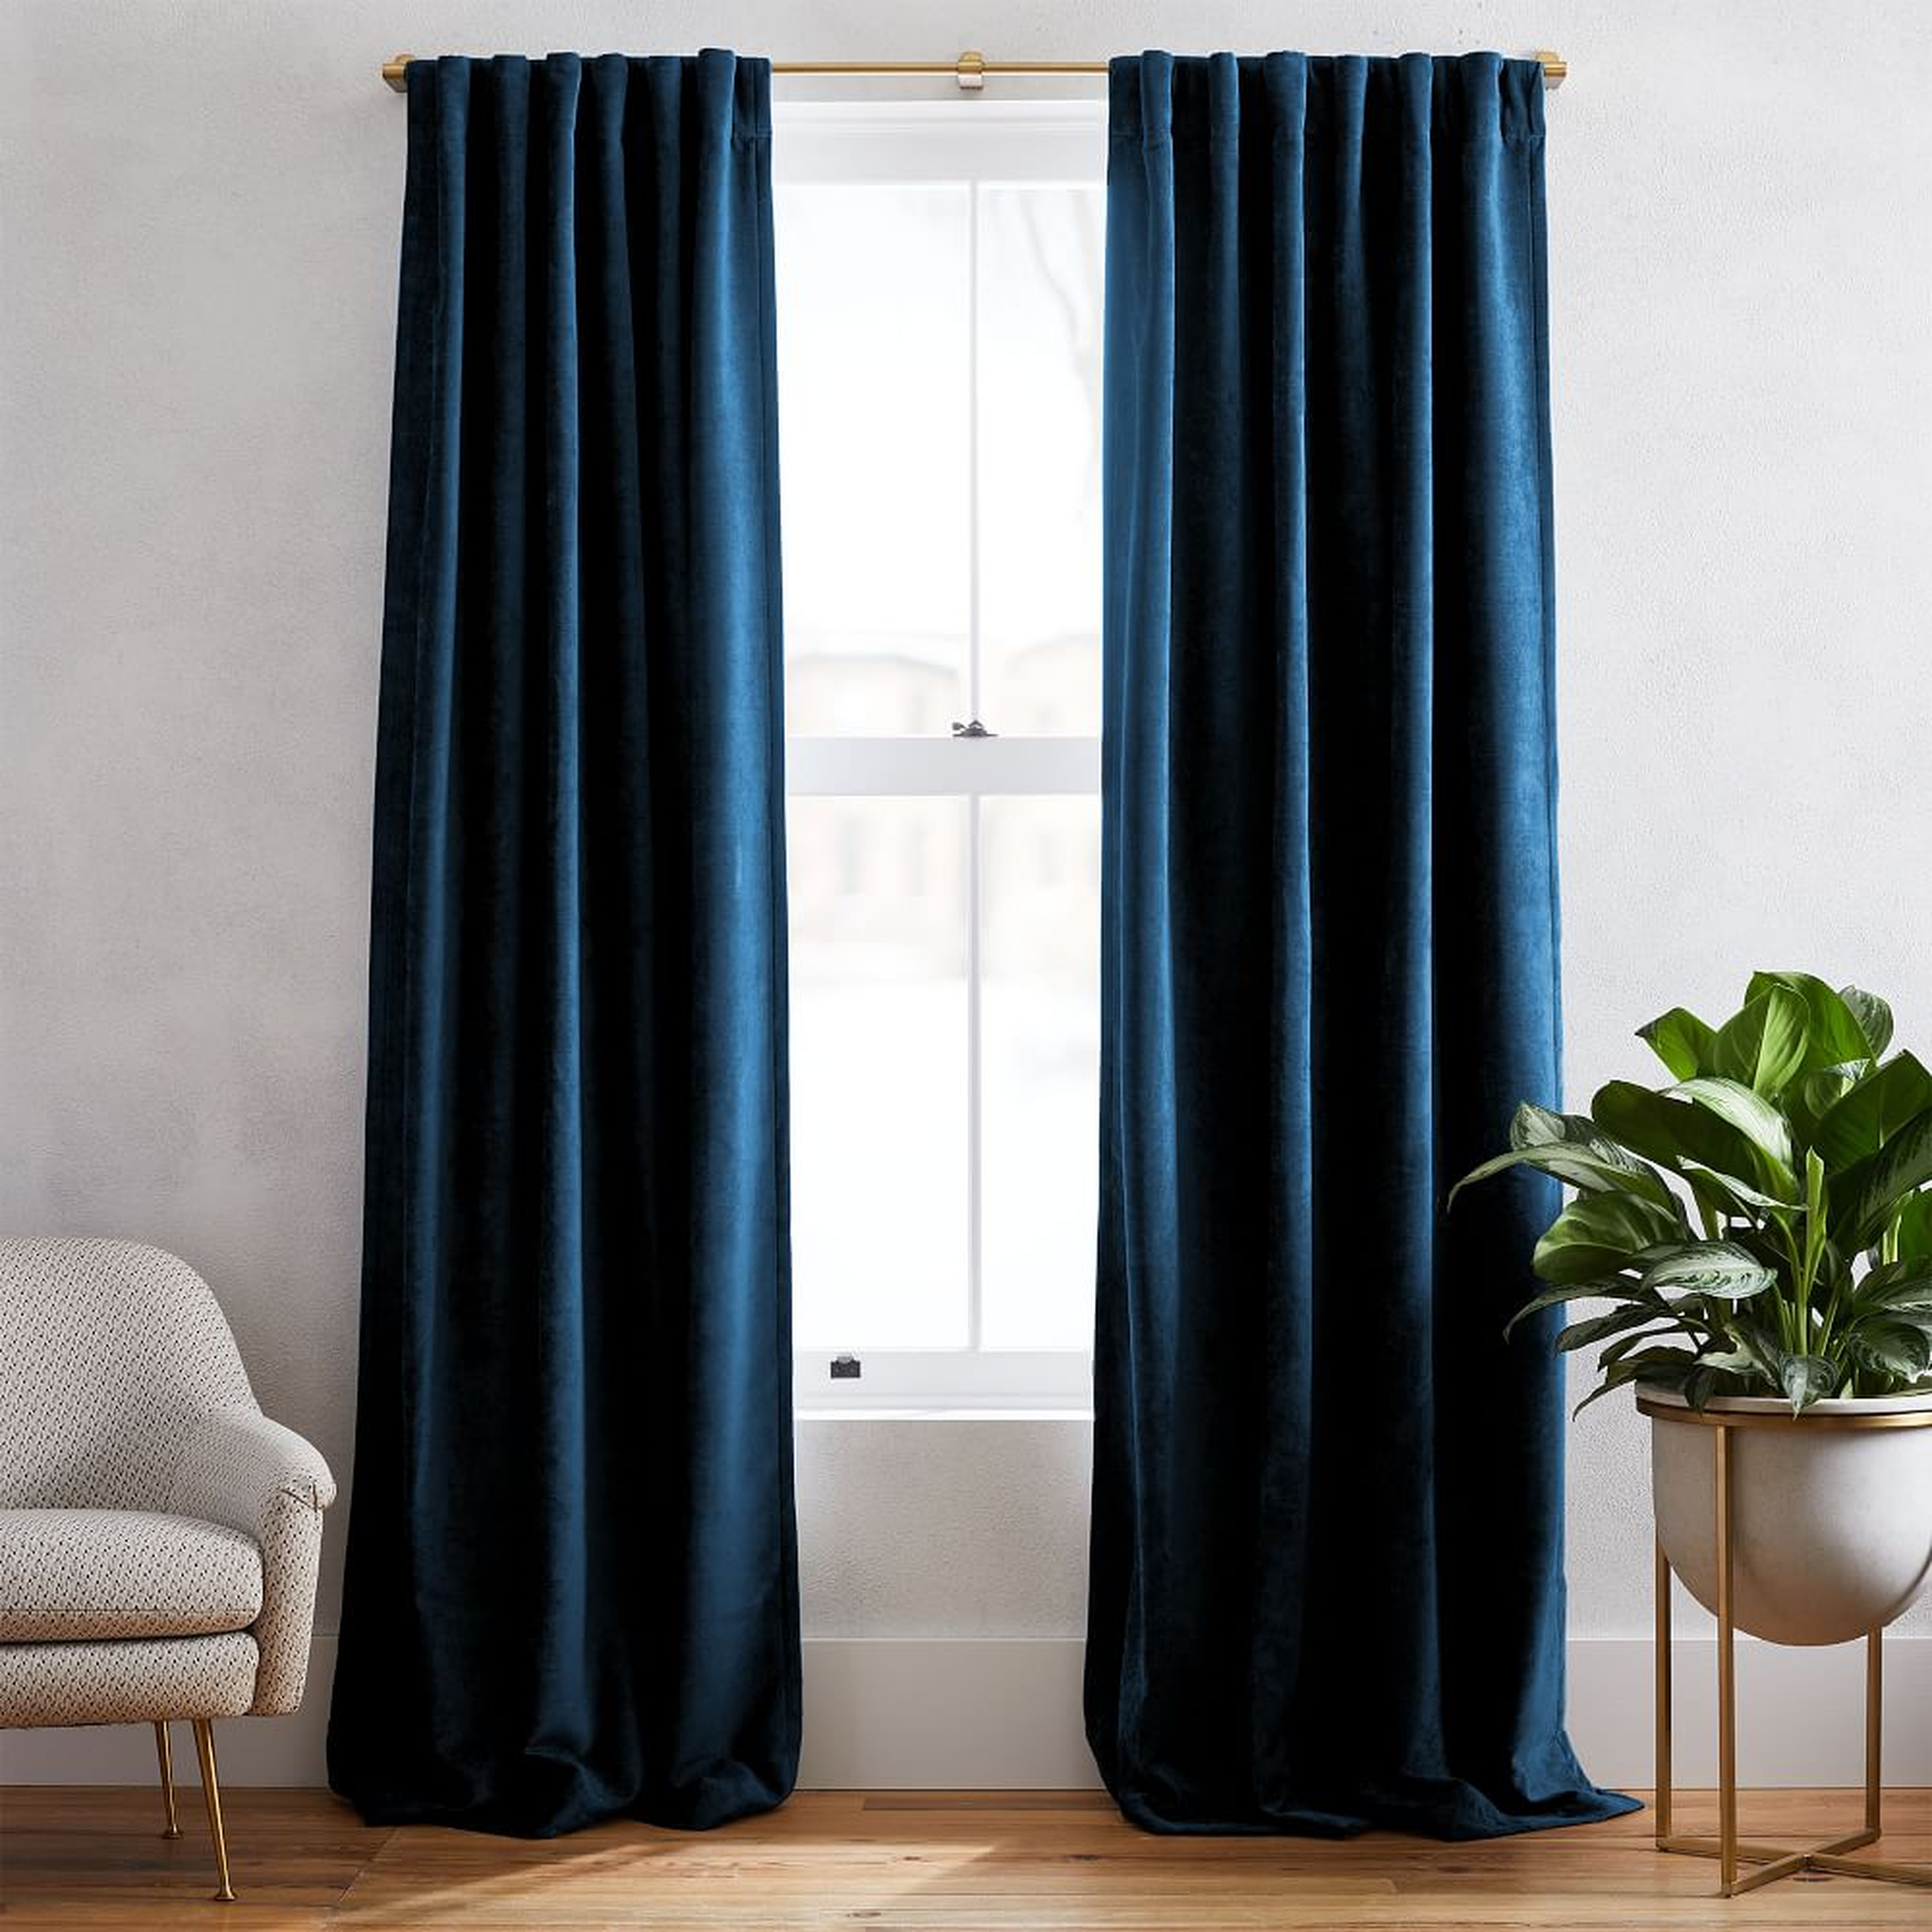 Worn Velvet Curtain with Cotton Lining, Regal Blue, 48"x108", Set of 2 - West Elm